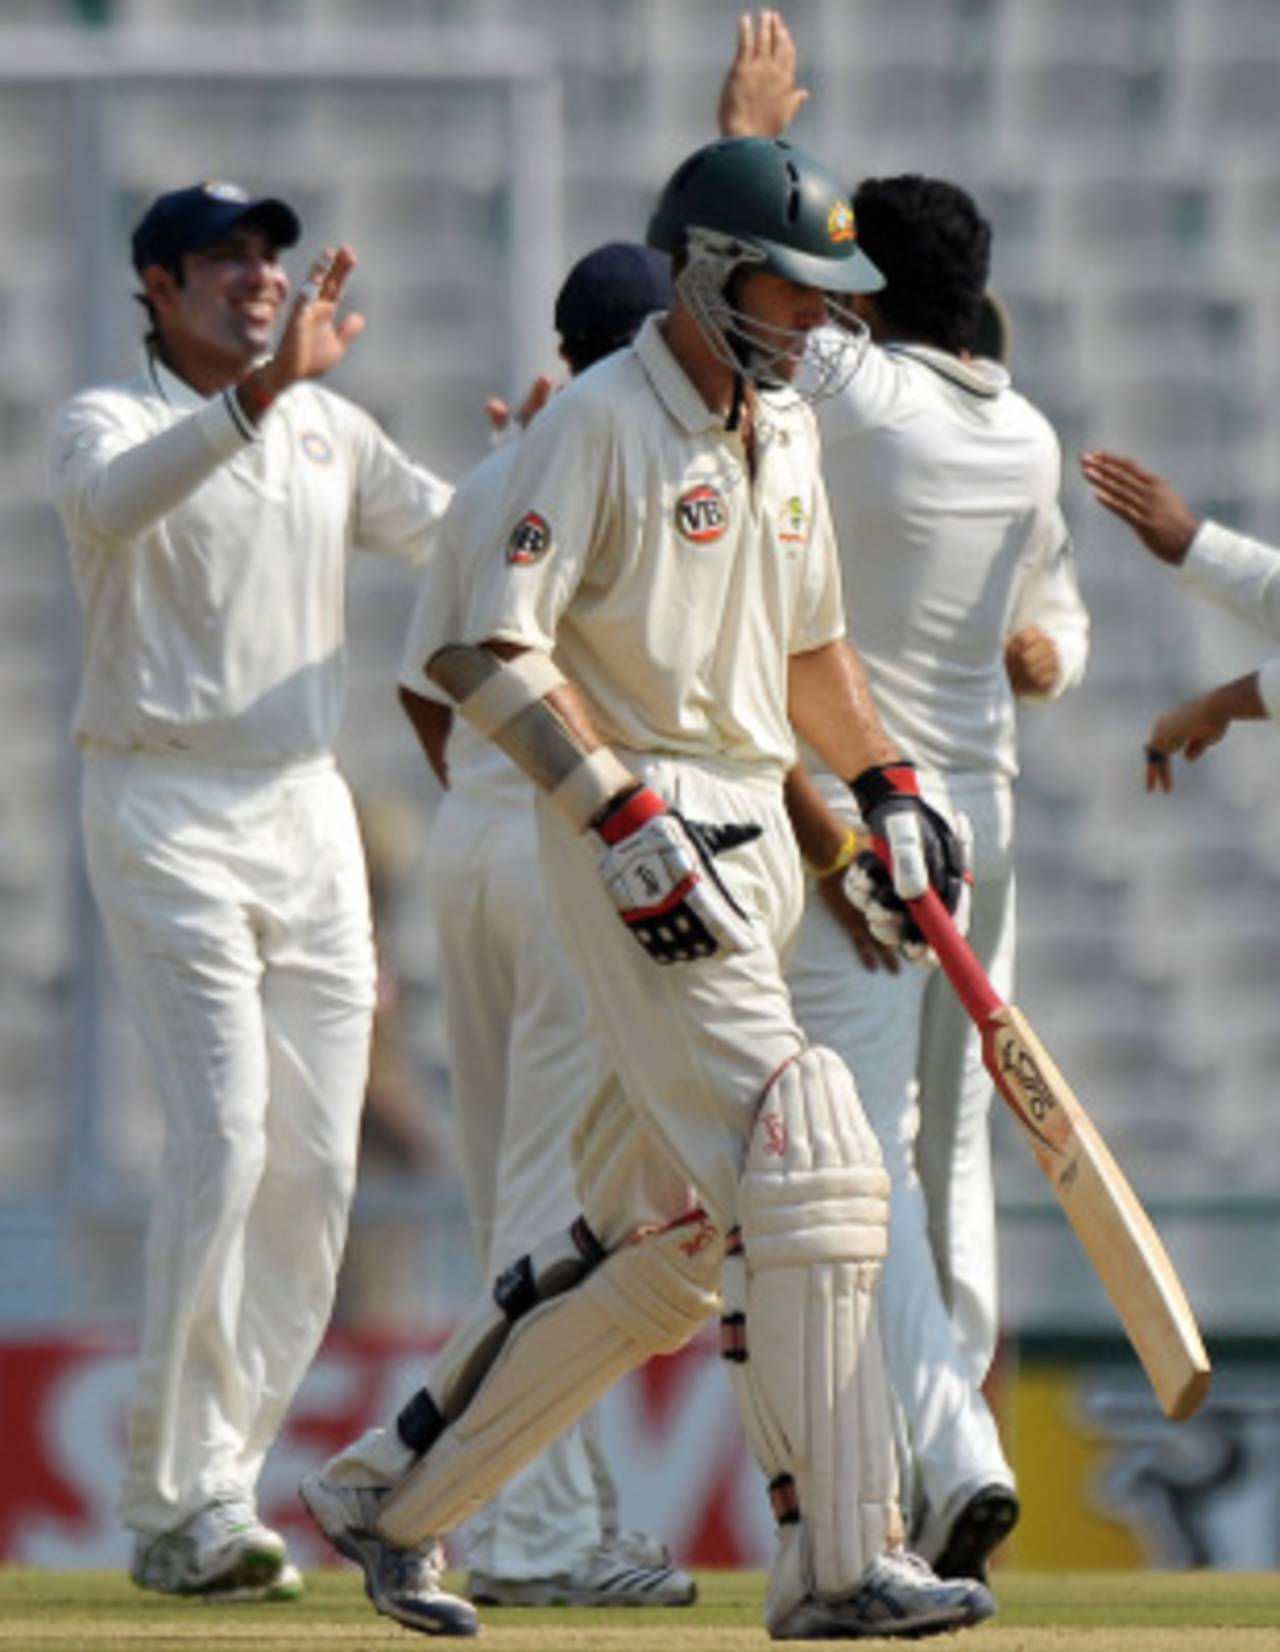 Simon Katich walks back to the pavilion as India's fielders celebrate, India v Australia, 1st Test, Mohali, 1st day, October 1, 2010